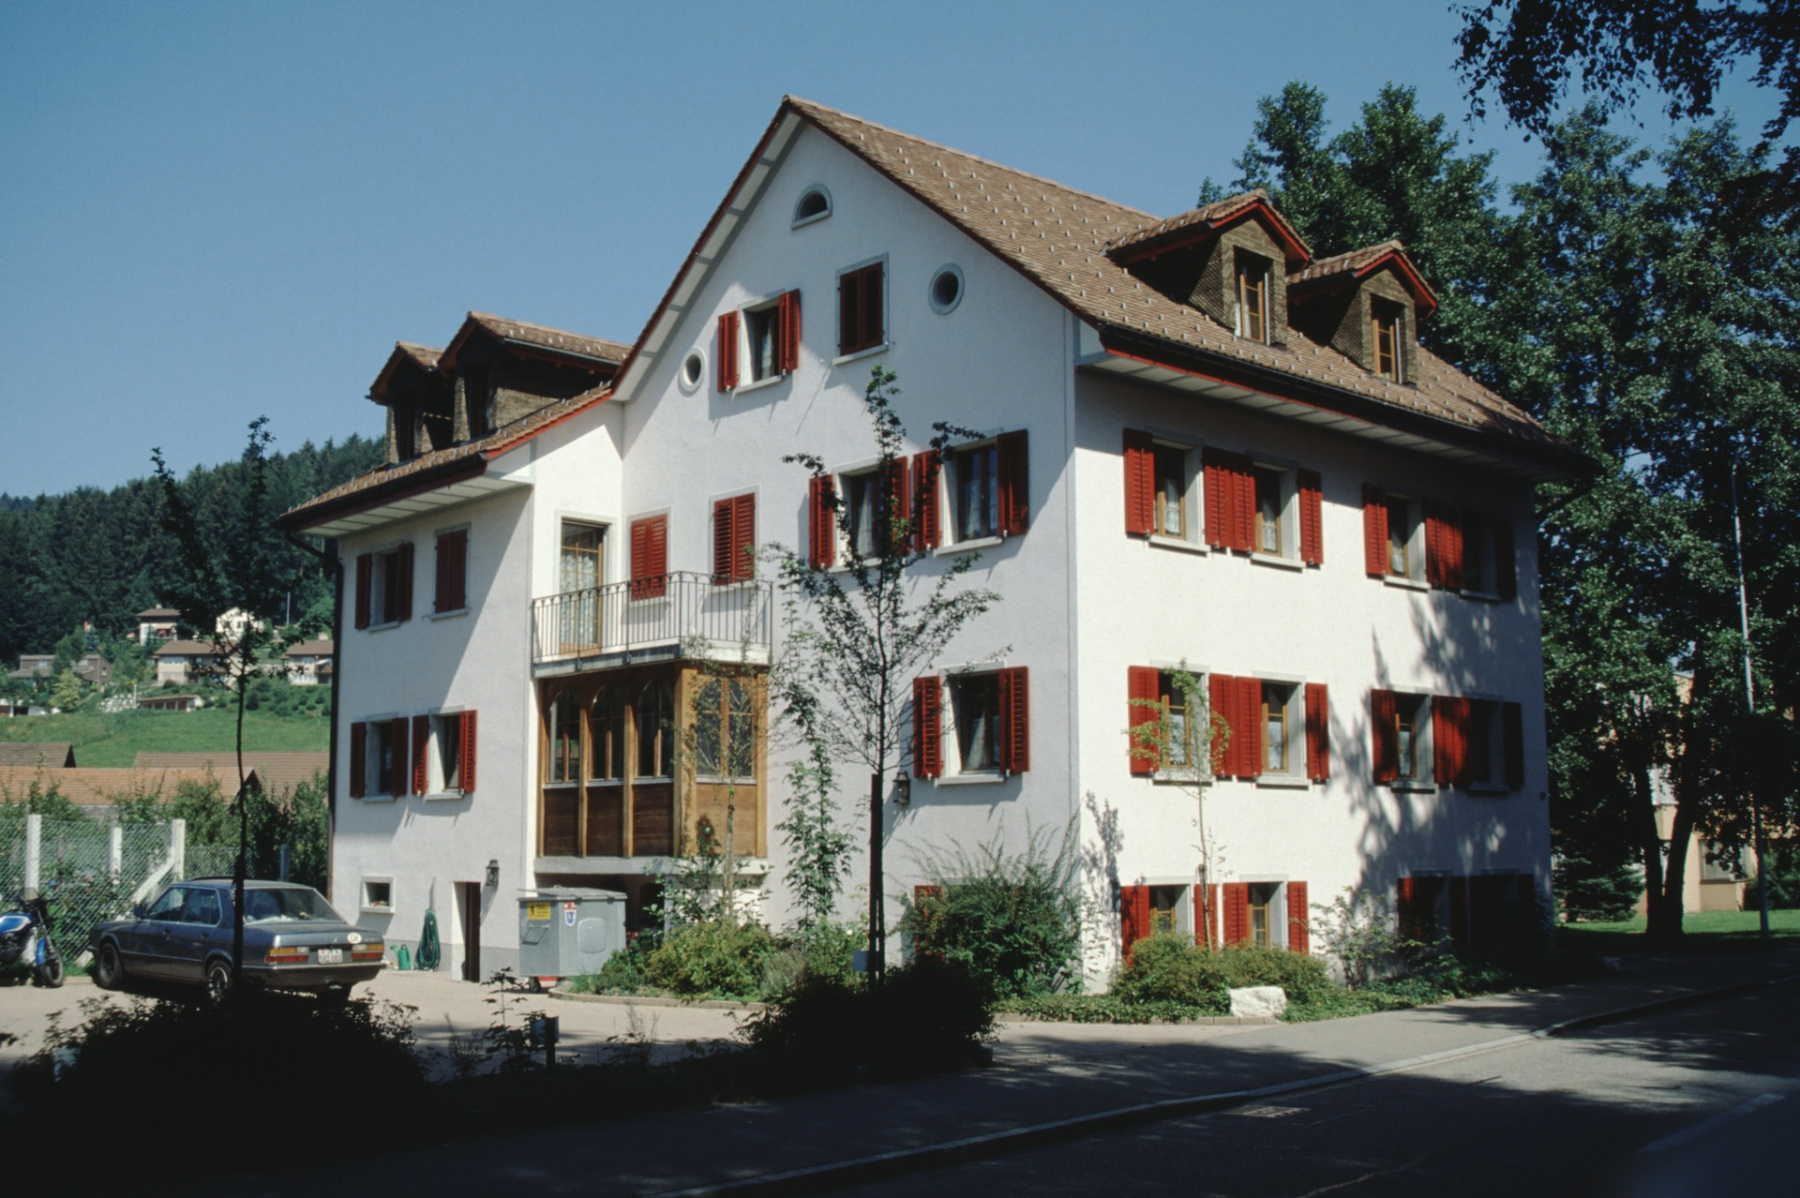 Baumastr.9, Sek.Schulhaus 1847-1854